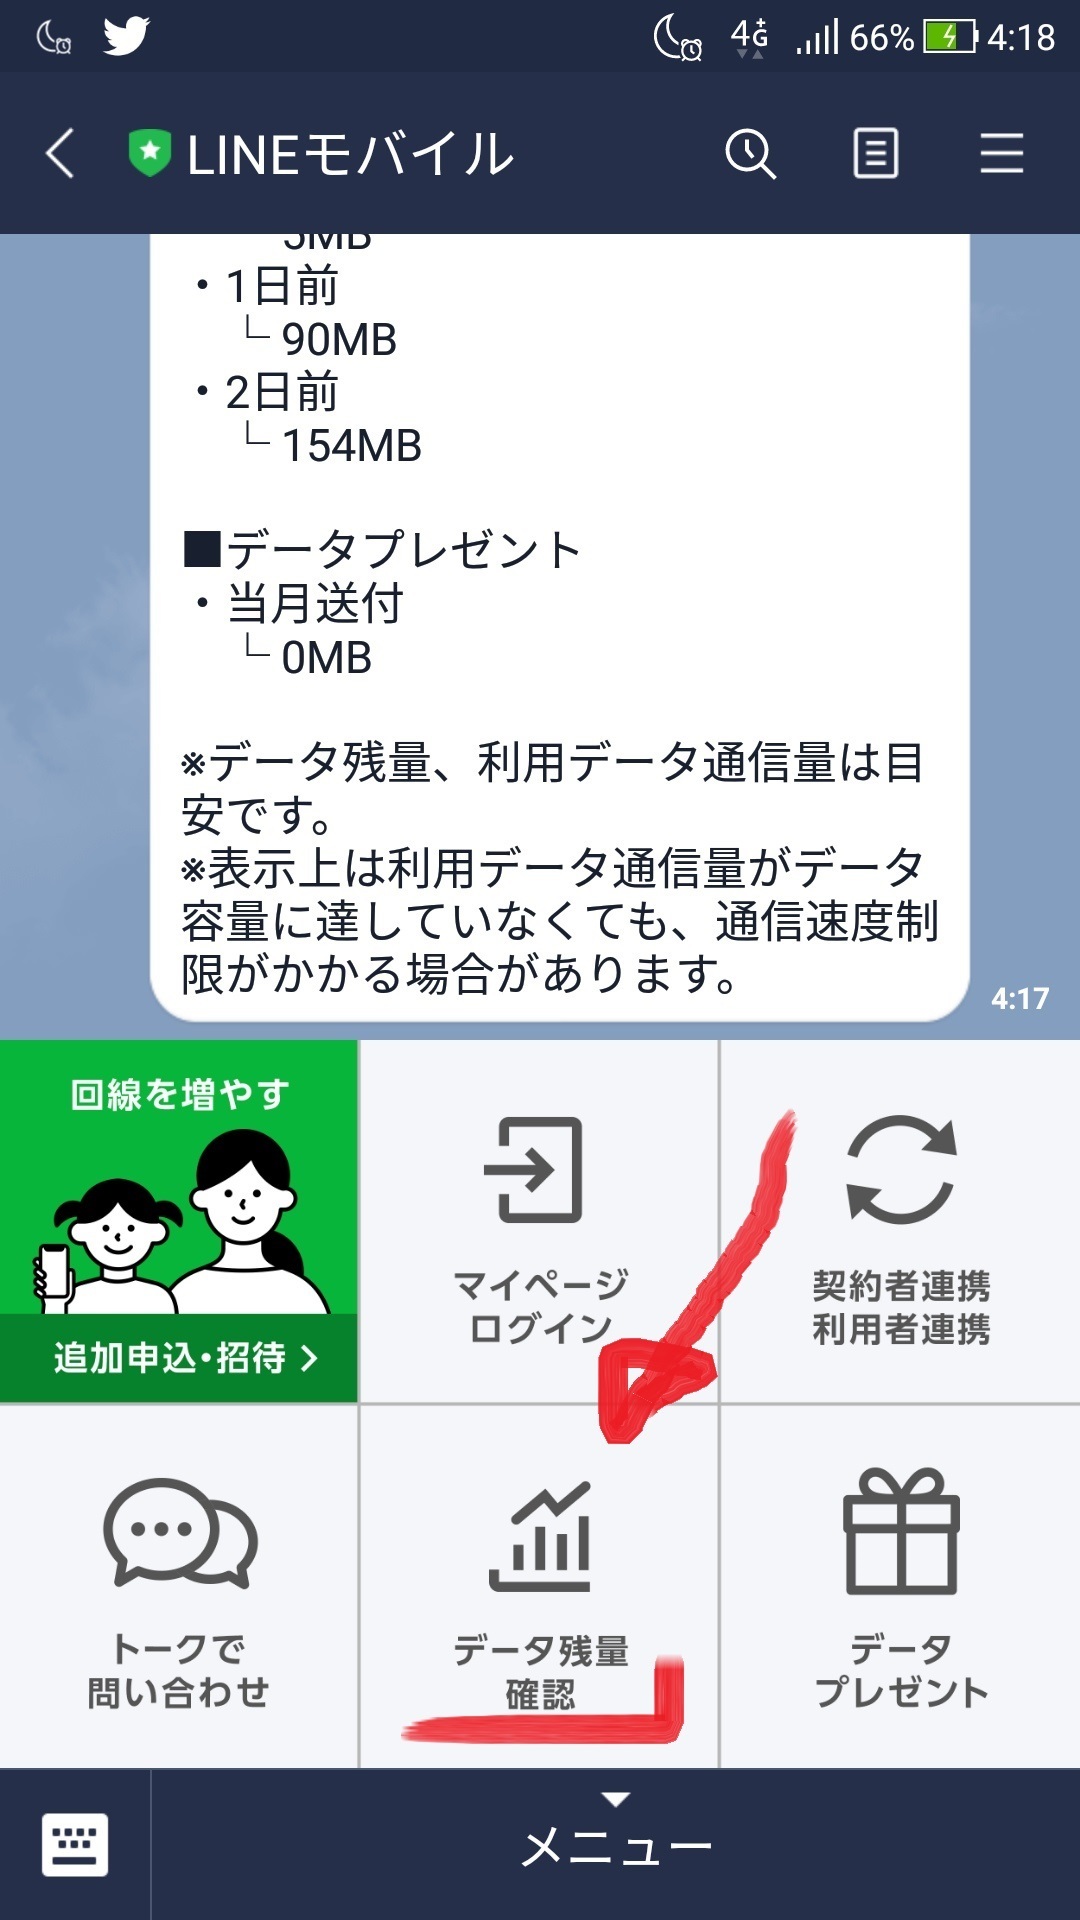 sumaho_LINE_mobile_app_kakuyasu_0428_2.jpg